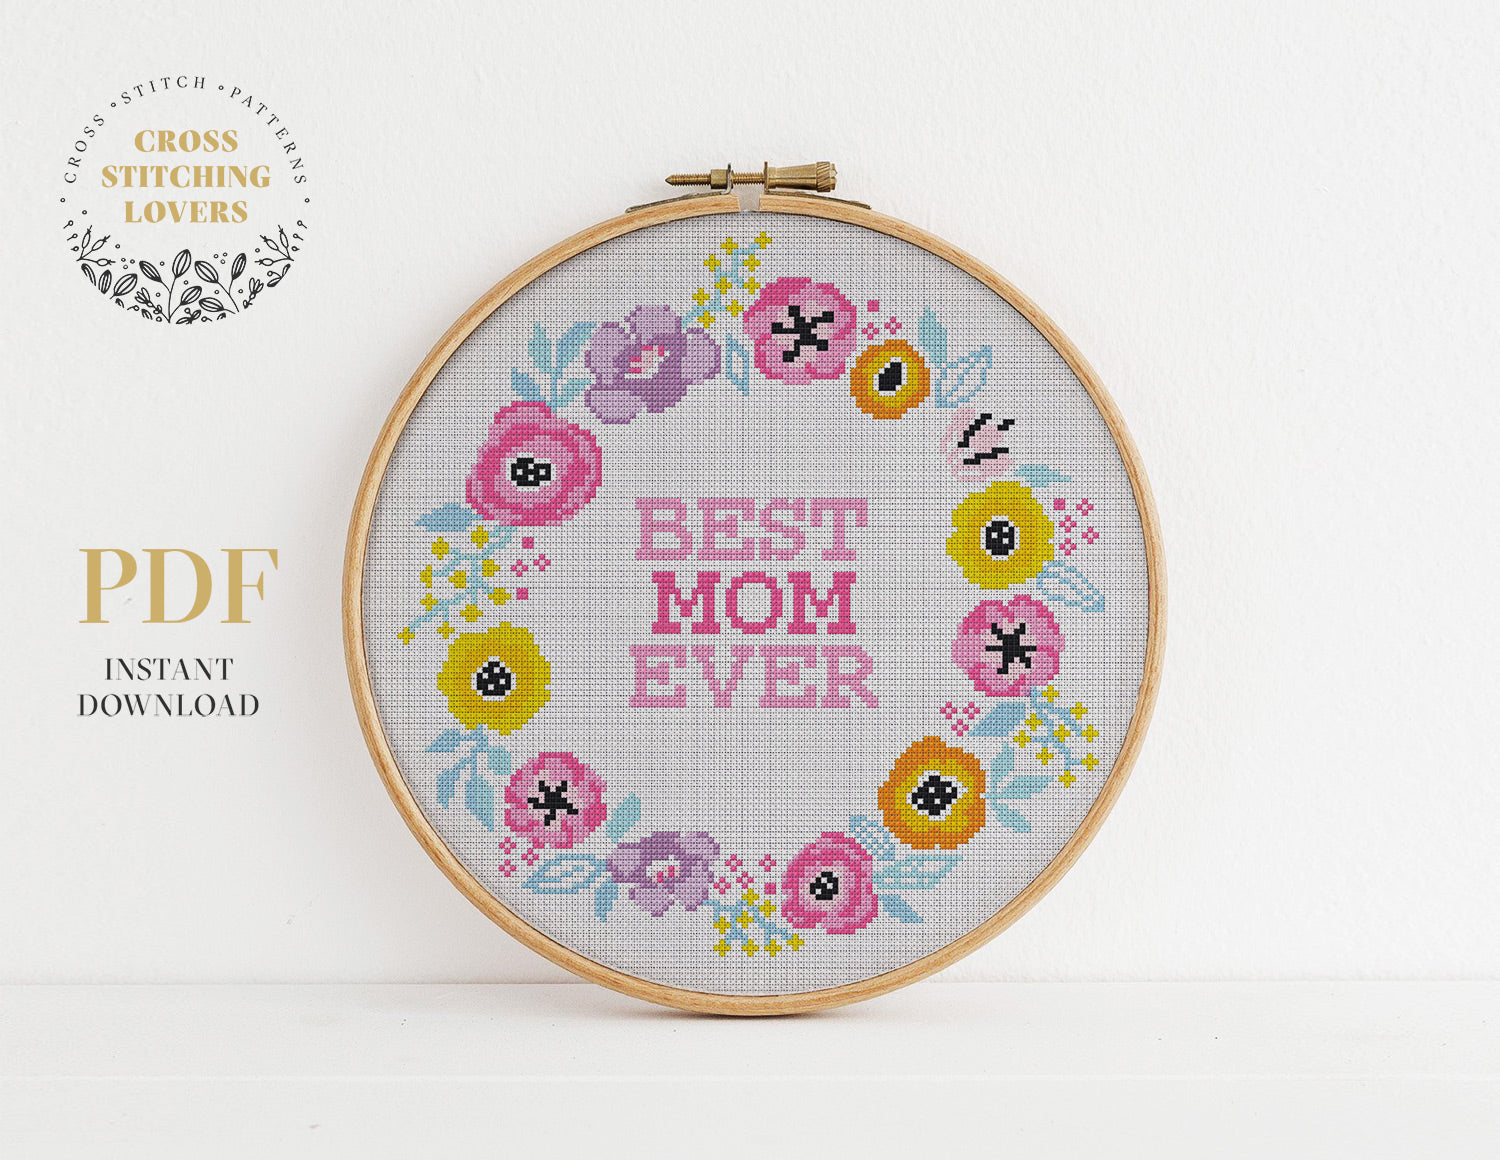 Best Mom Ever - Cross stitch pattern